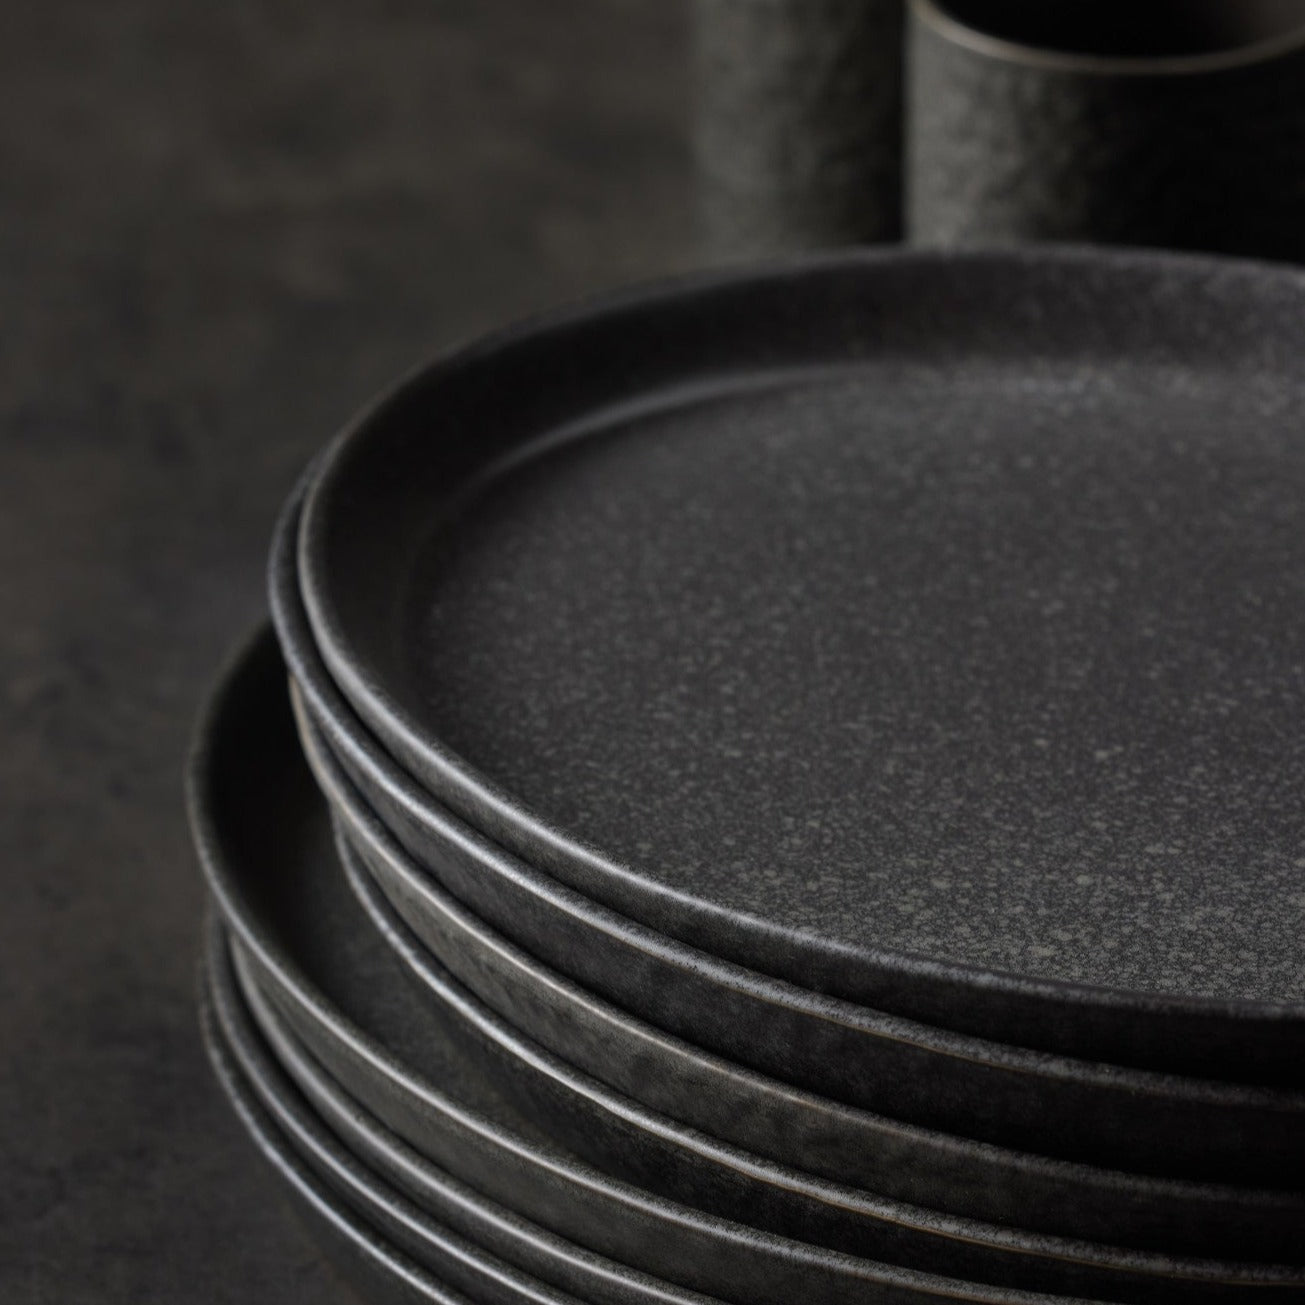 Katachi Stoneware Dinnerware Set - Charcoal